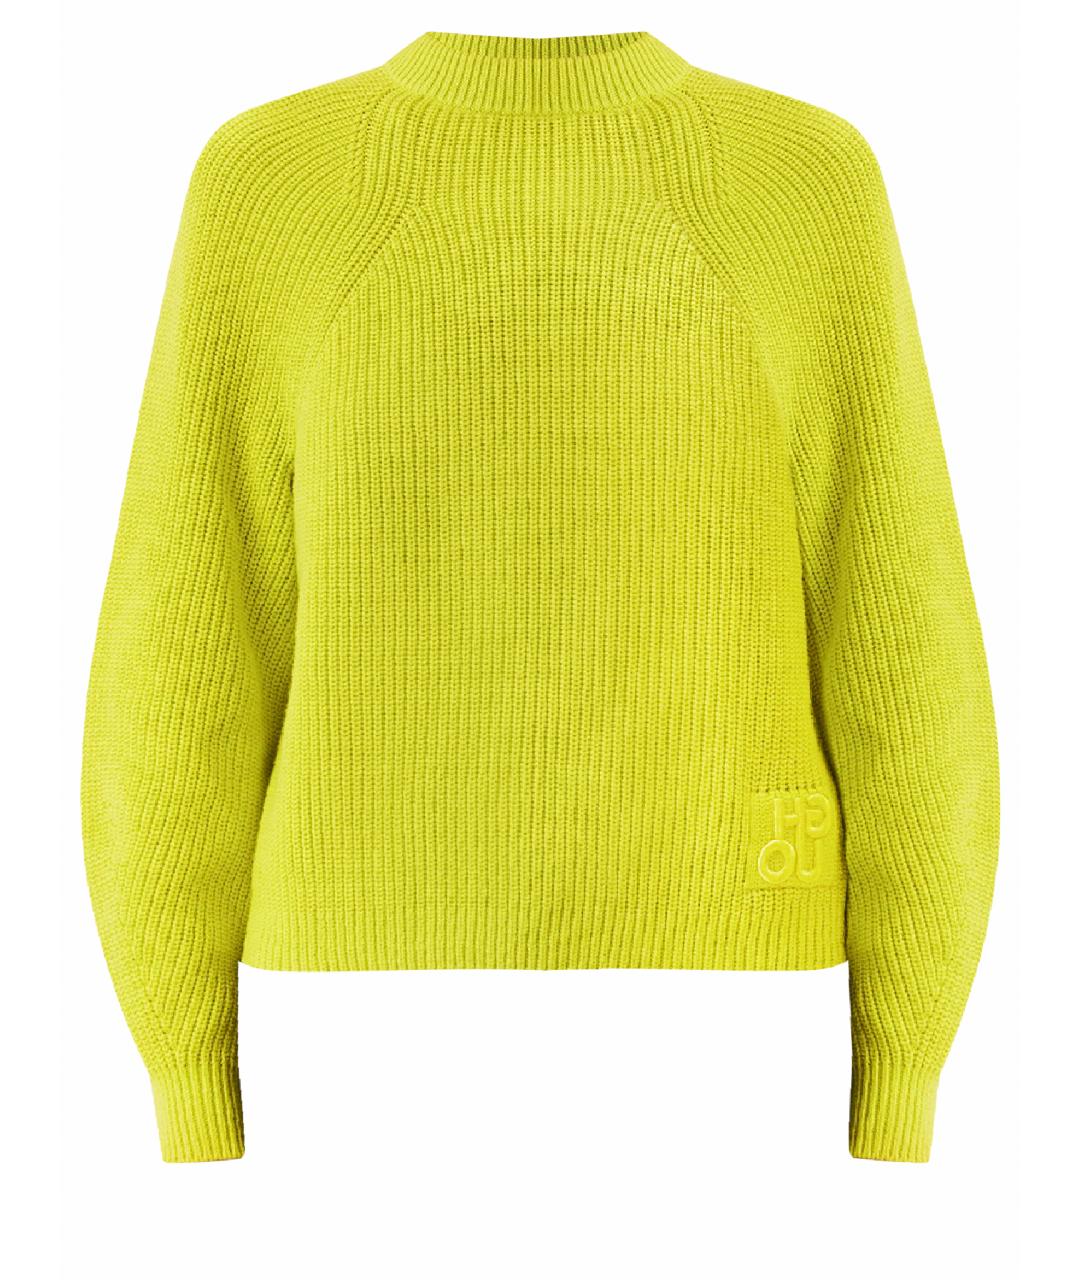 HUGO BOSS Желтый хлопковый джемпер / свитер, фото 1